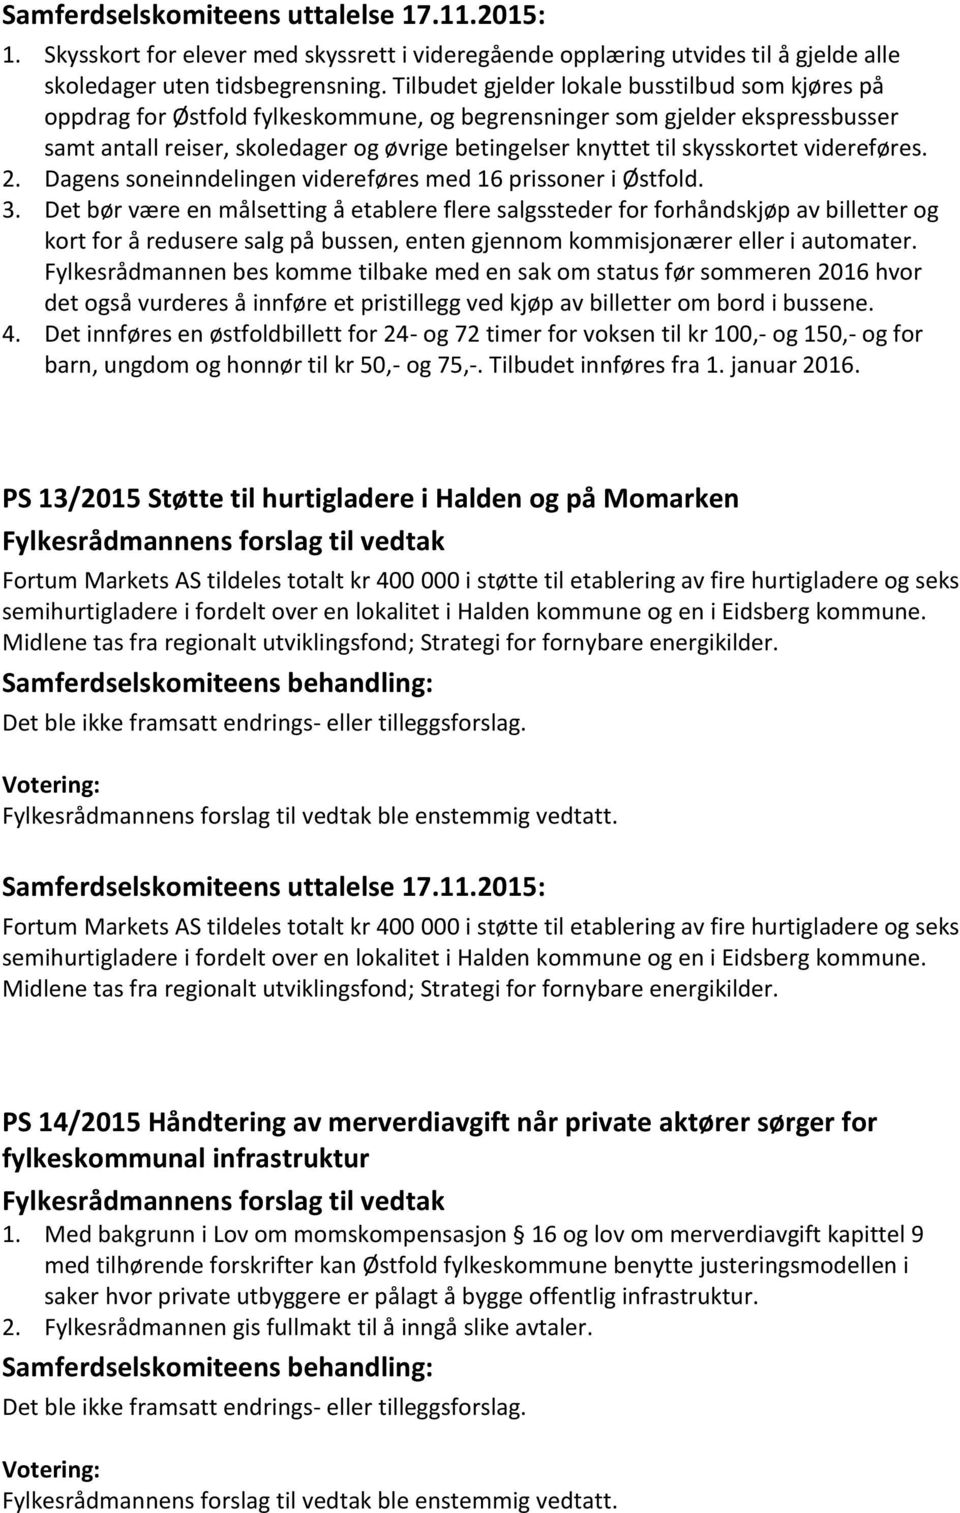 skysskortet videreføres. 2. Dagens soneinndelingen videreføres med 16 prissoner i Østfold. 3.